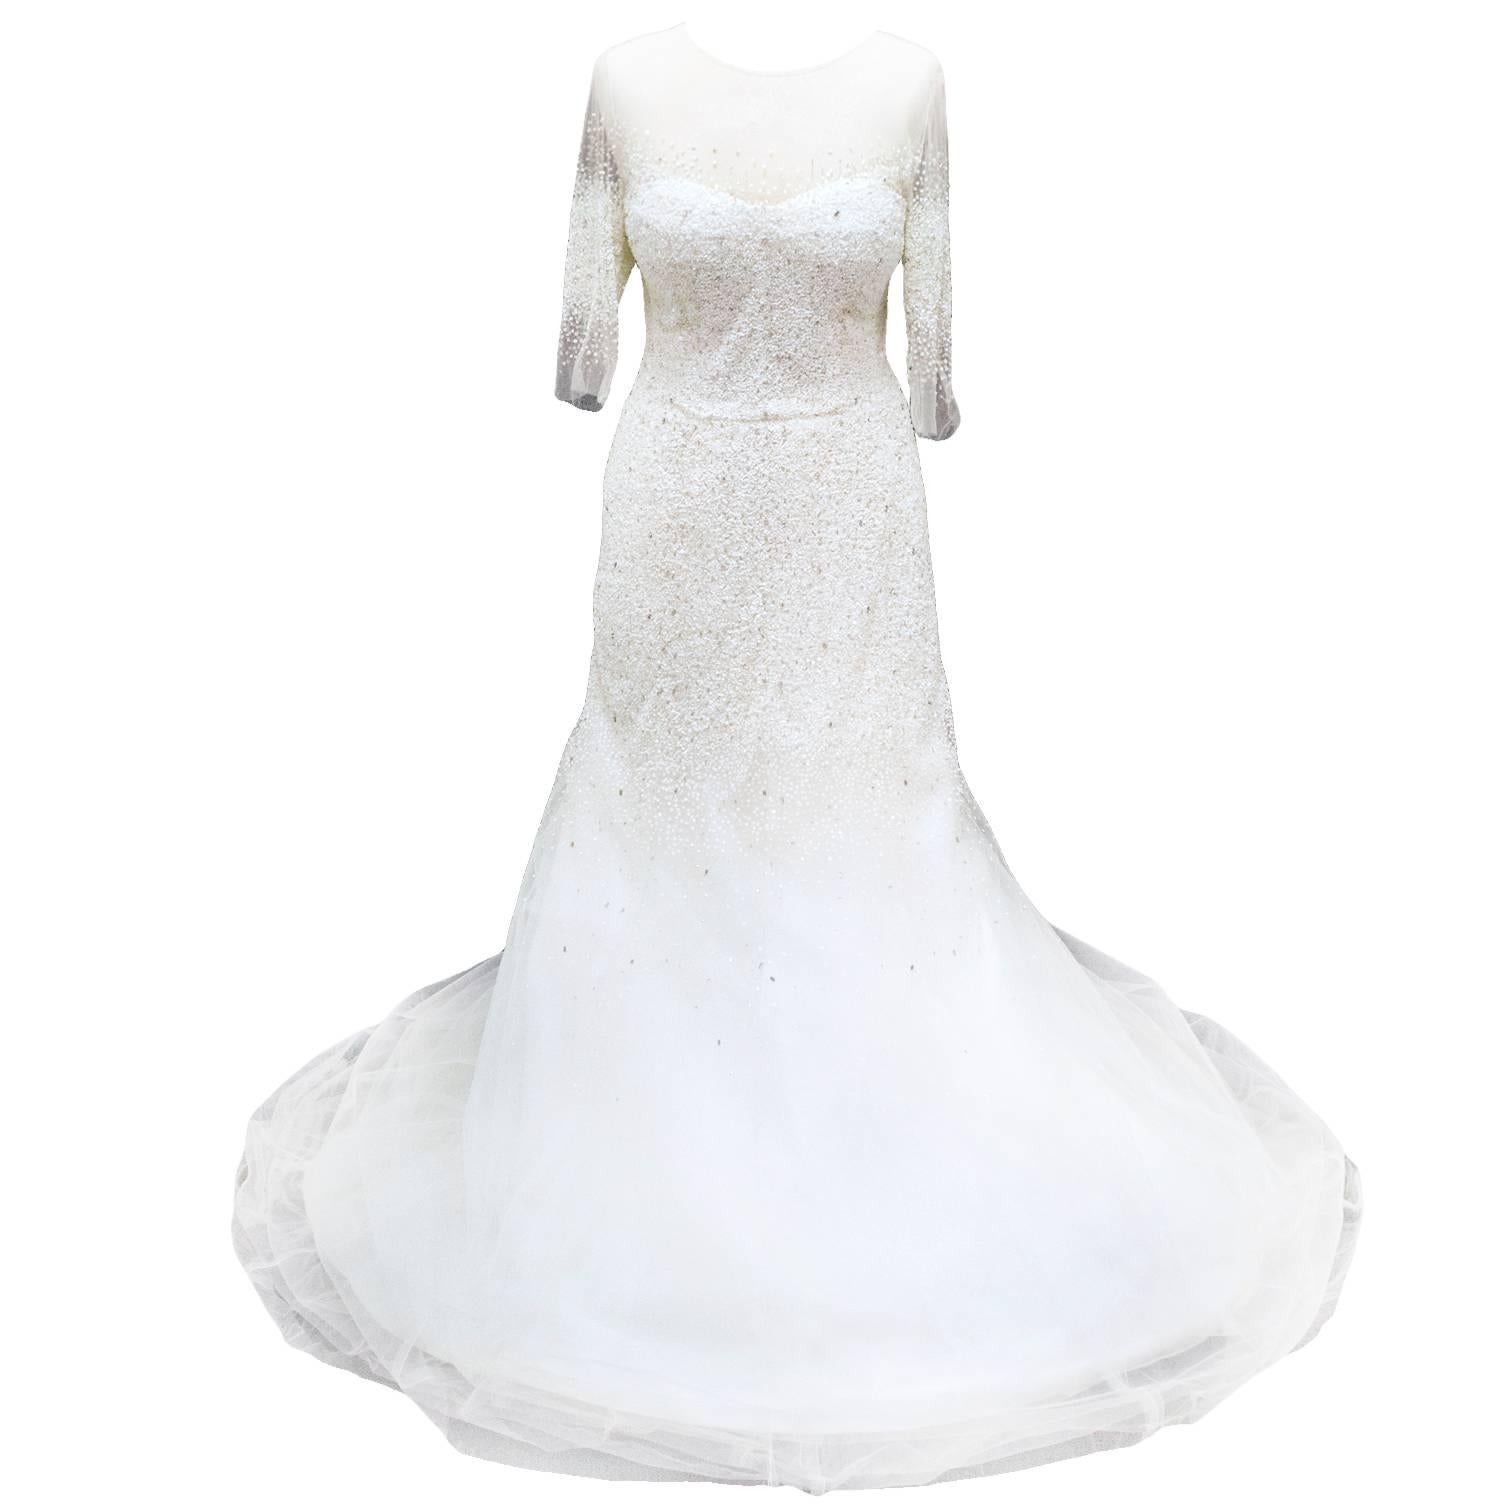 Monique Lhullier Custom Made Embellished Wedding Dress For Sale